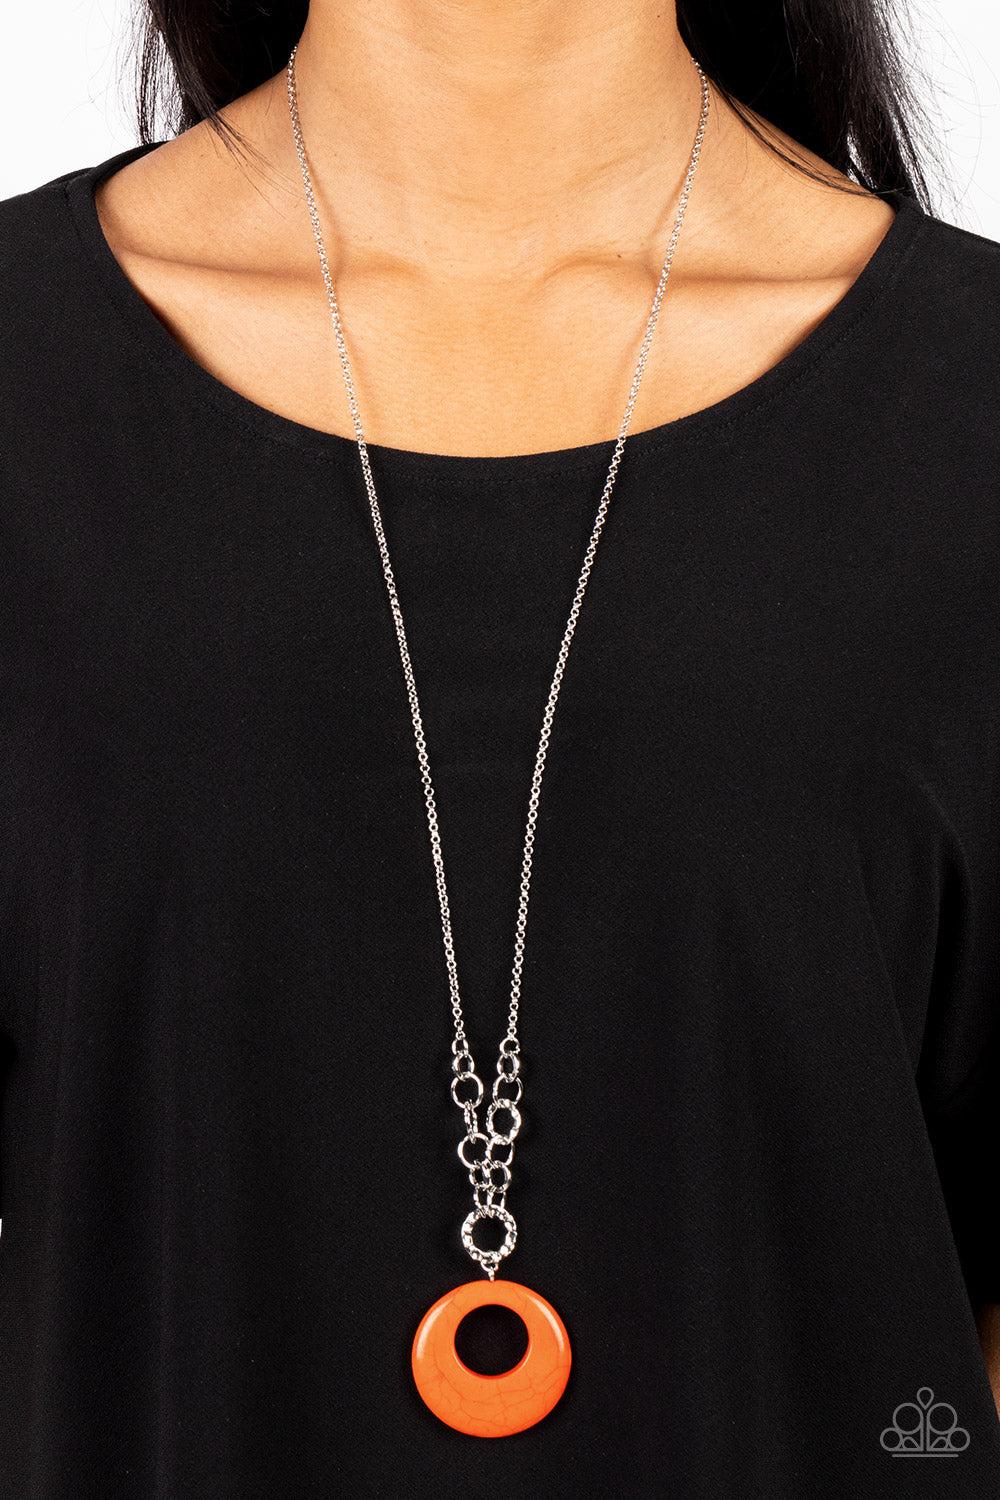 Hidden Dune Orange Stone Necklace - Paparazzi Accessories- lightbox - CarasShop.com - $5 Jewelry by Cara Jewels